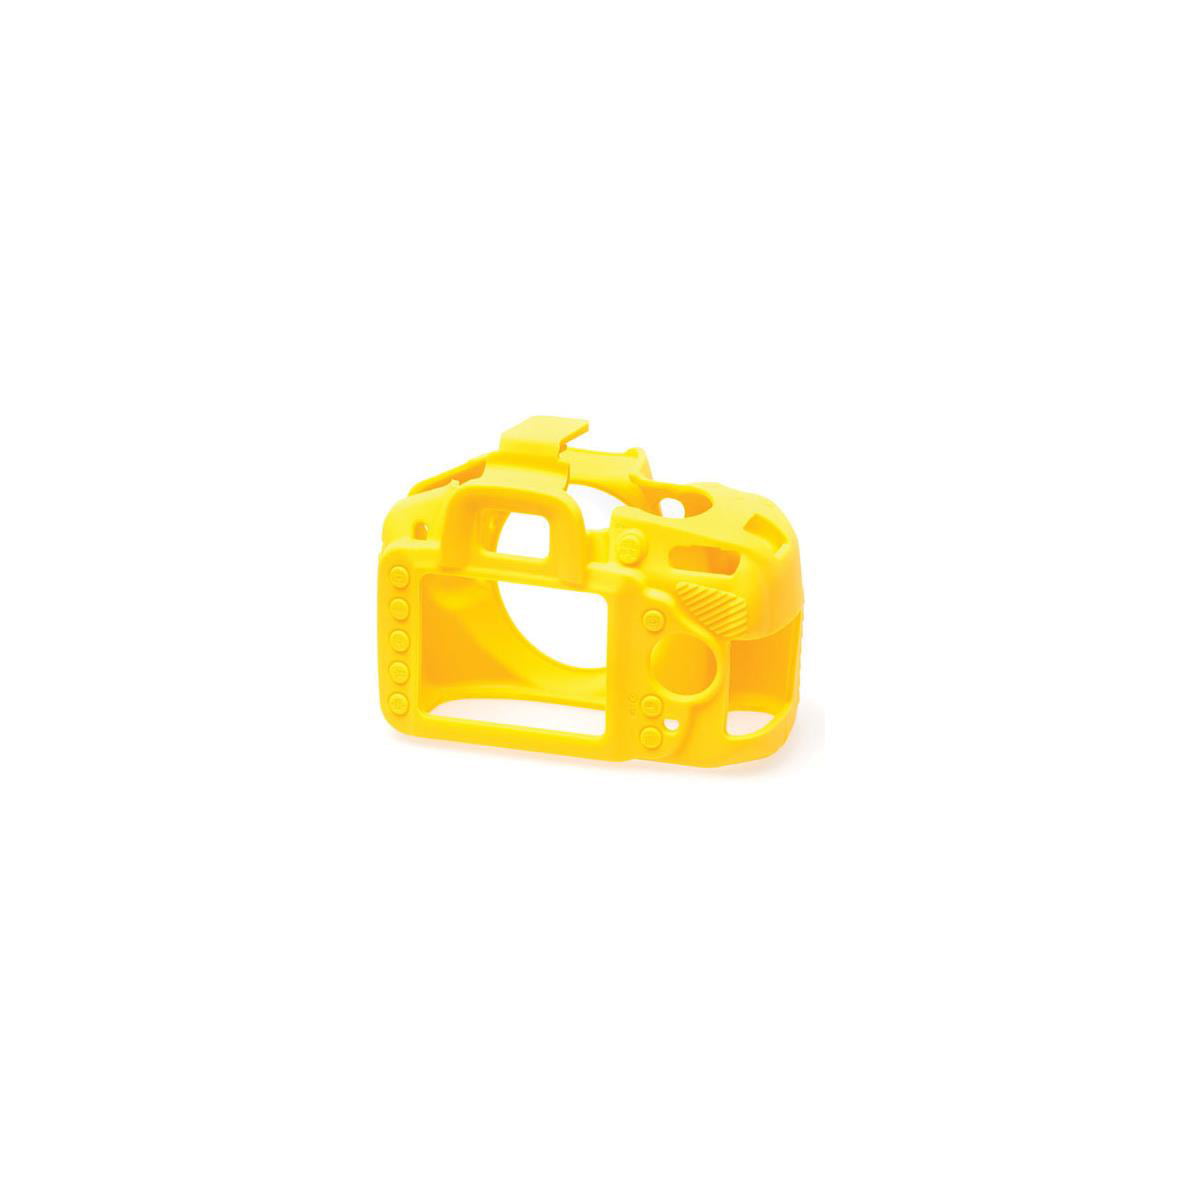 1 x easyCover by Bilora Case für Nikon D3200 gelb Silikon Schutzhülle Neu 